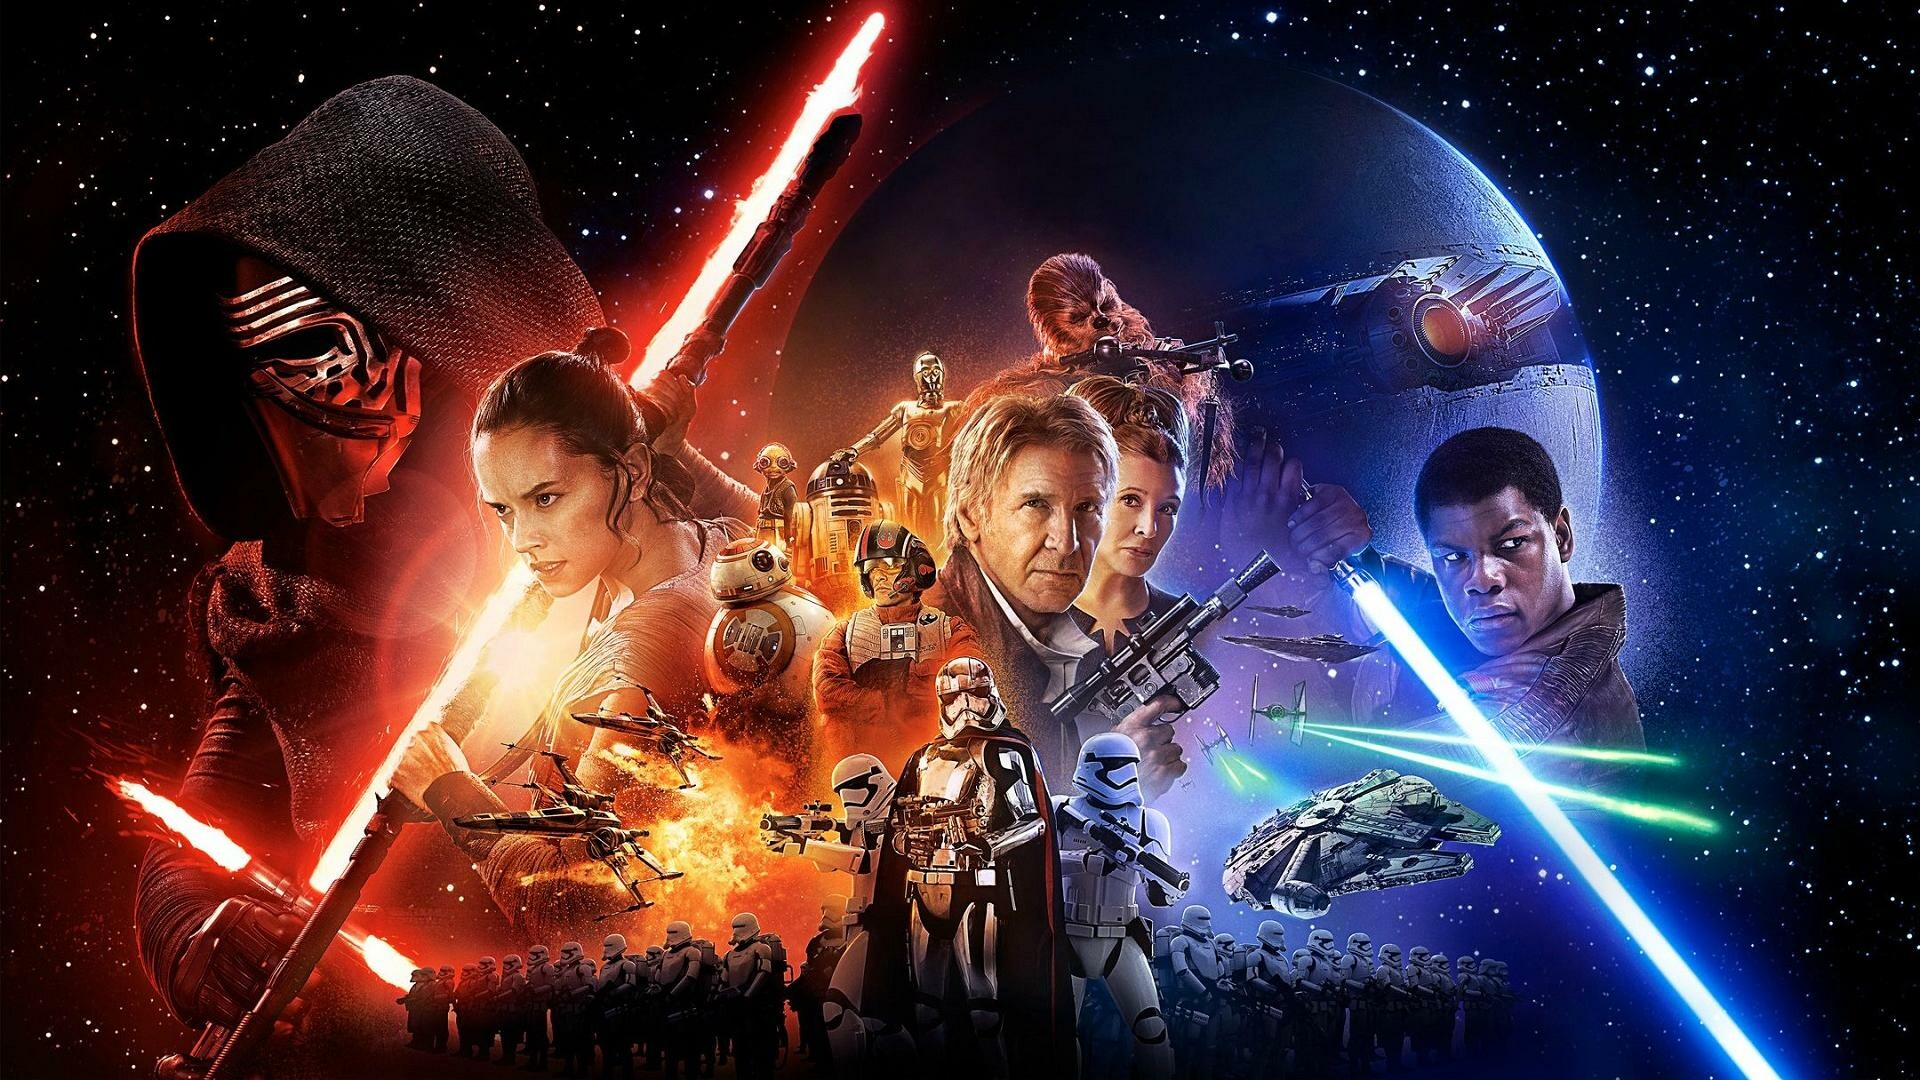 Star Wars: A space opera set “a long time ago in a galaxy far, far away”. 1920x1080 Full HD Background.